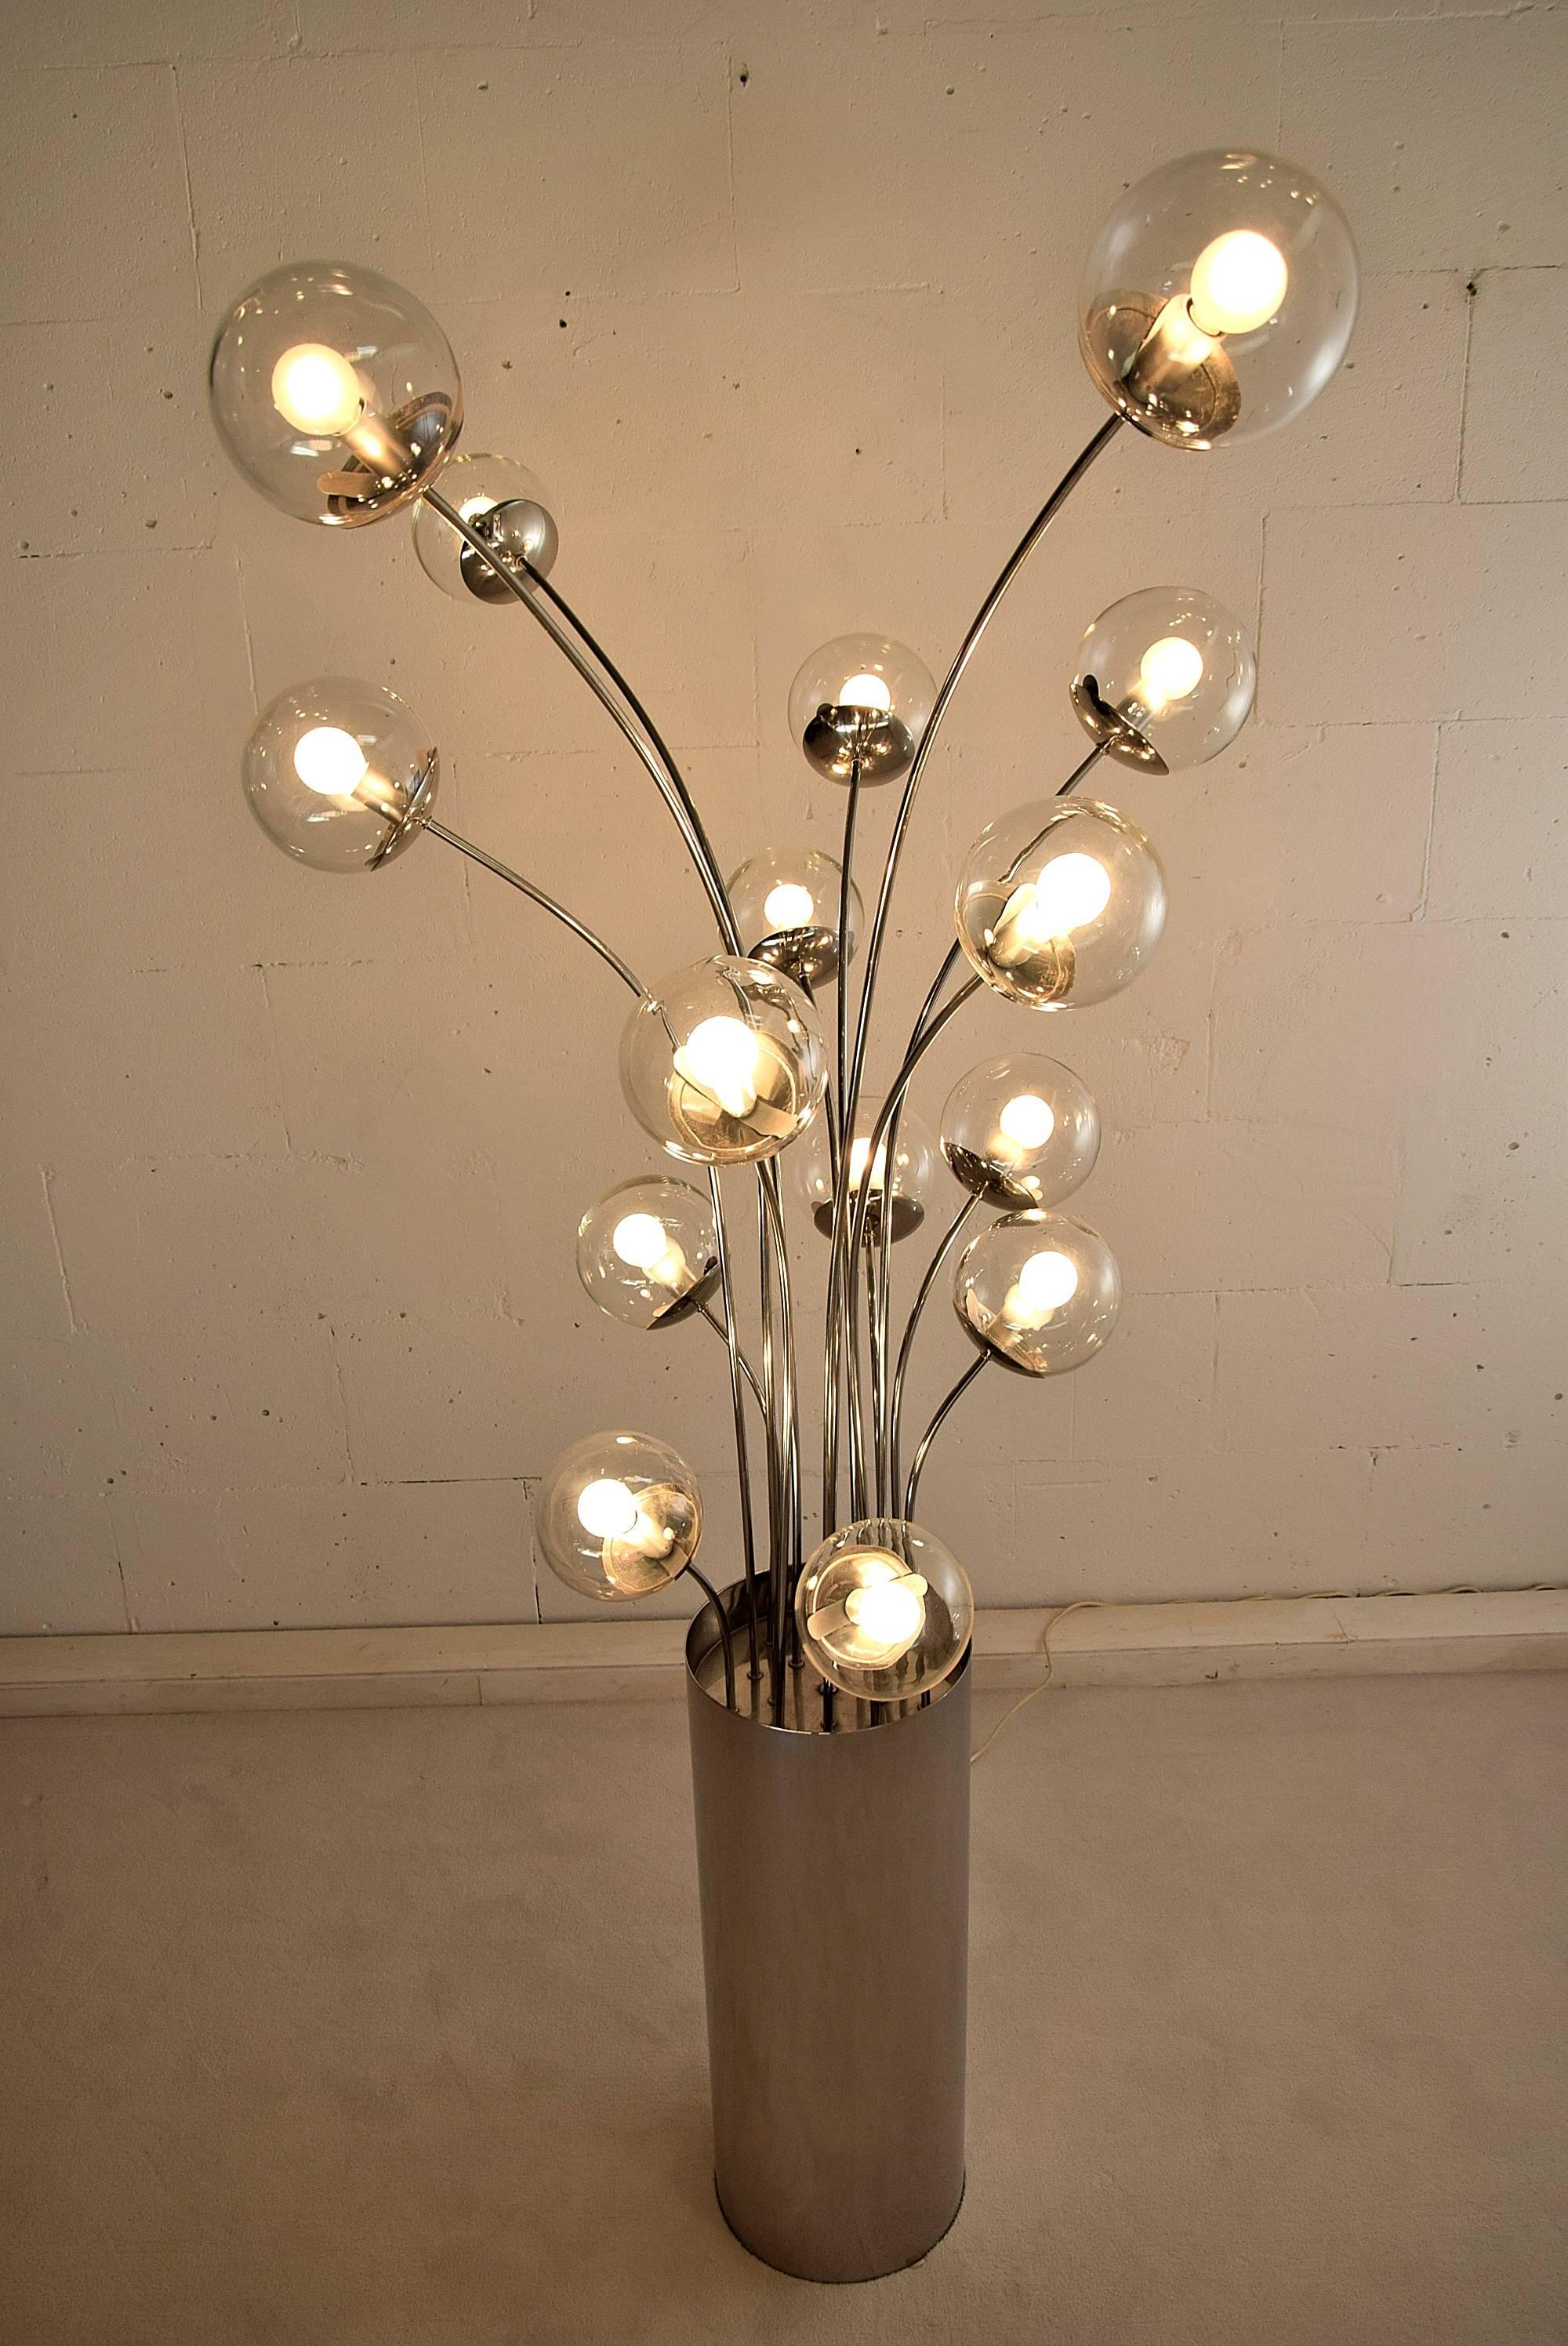 Lumi Italy Mid-Century Modern chrome floor lamp.
This lamp featured in Alain Delon's 1973 cult movie 